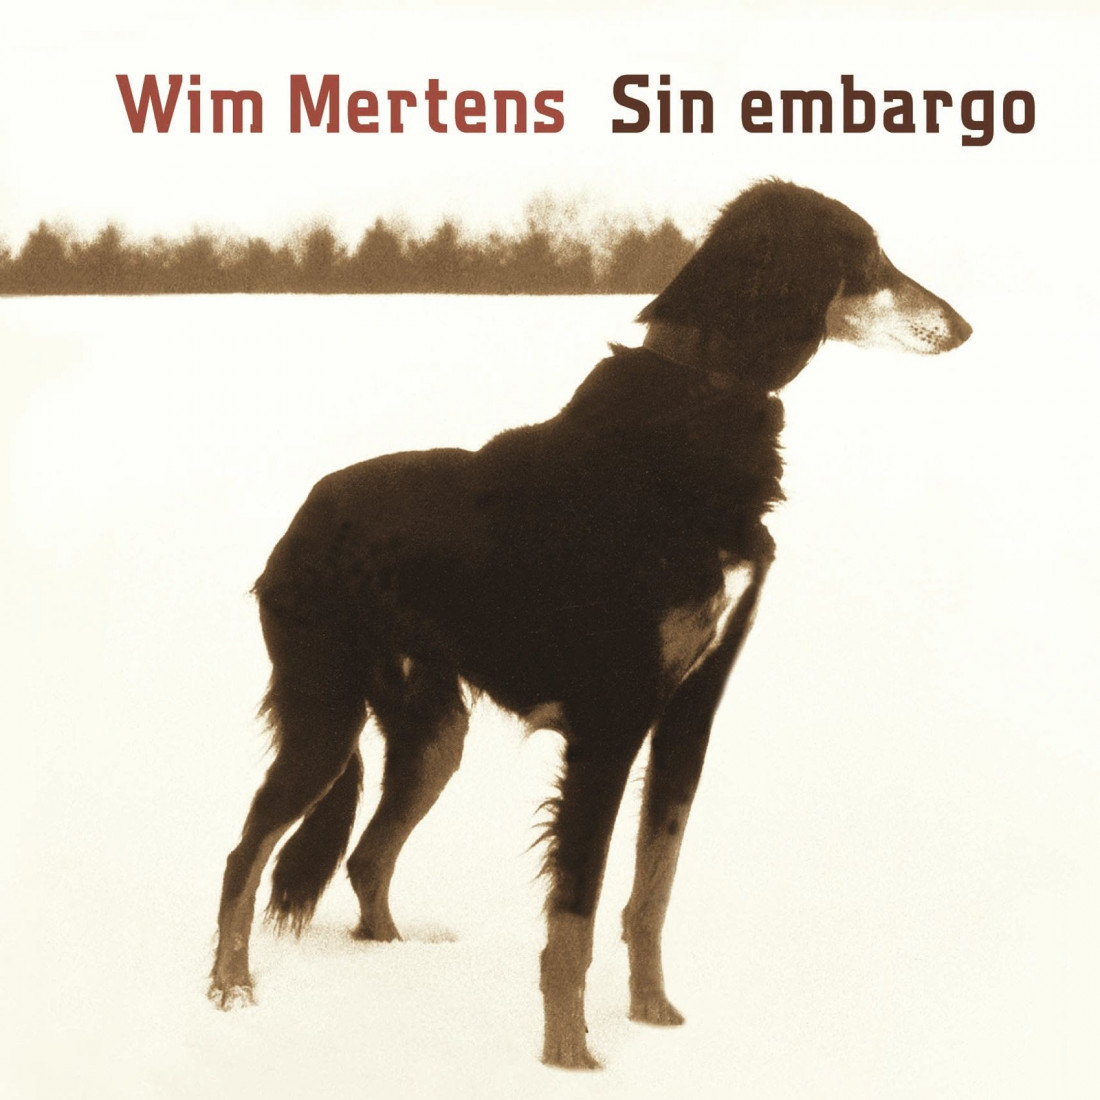 [Wim Mertens] 8.The Scene (Sin Embargo) Photo-Image